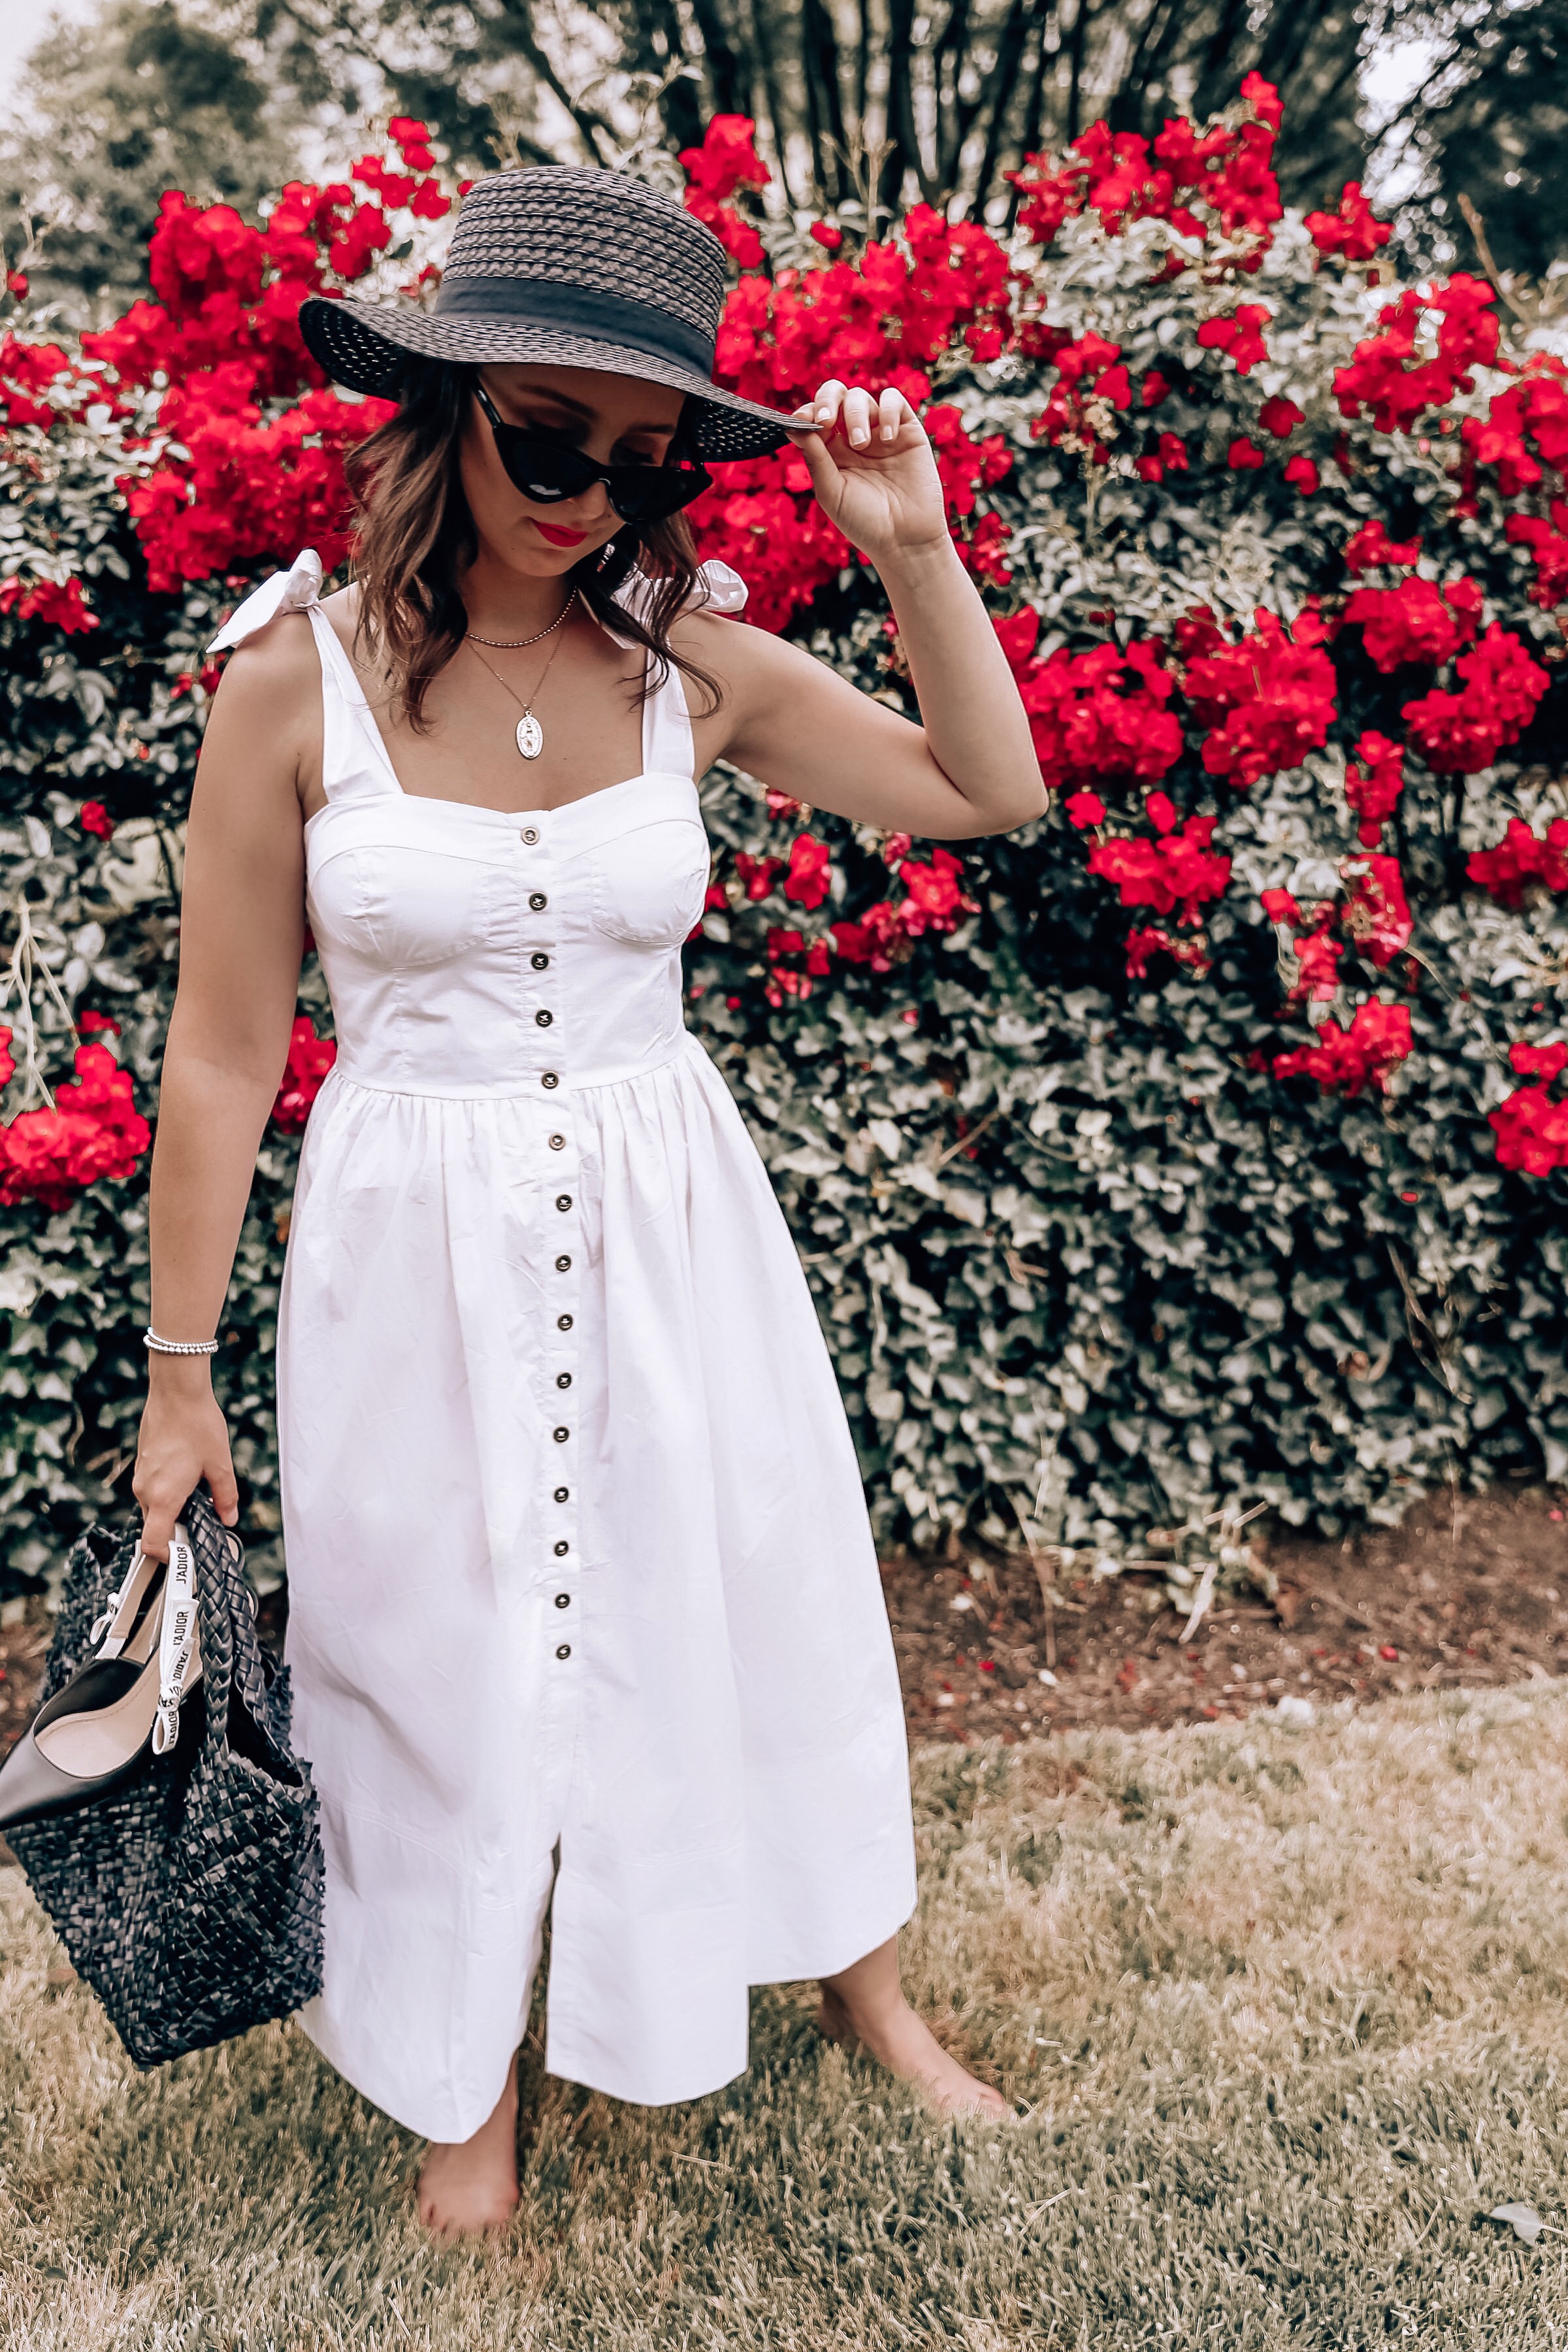 dior sling backs-little white dress-style-outfit-blogger-etienne aigner-bag